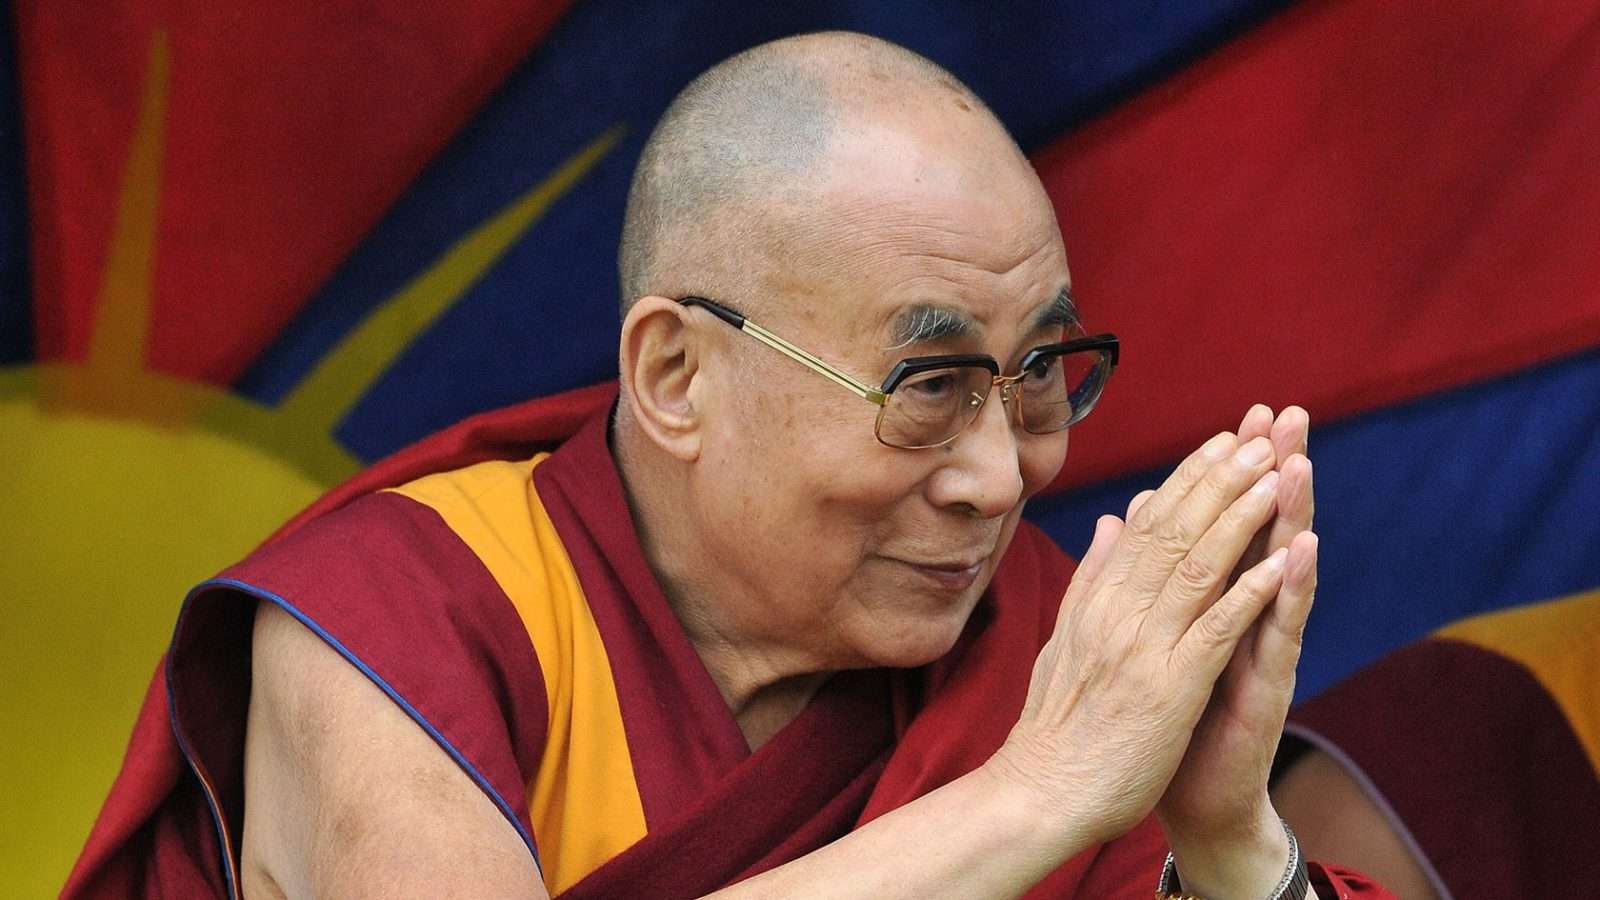 Dalai Lama's First Album